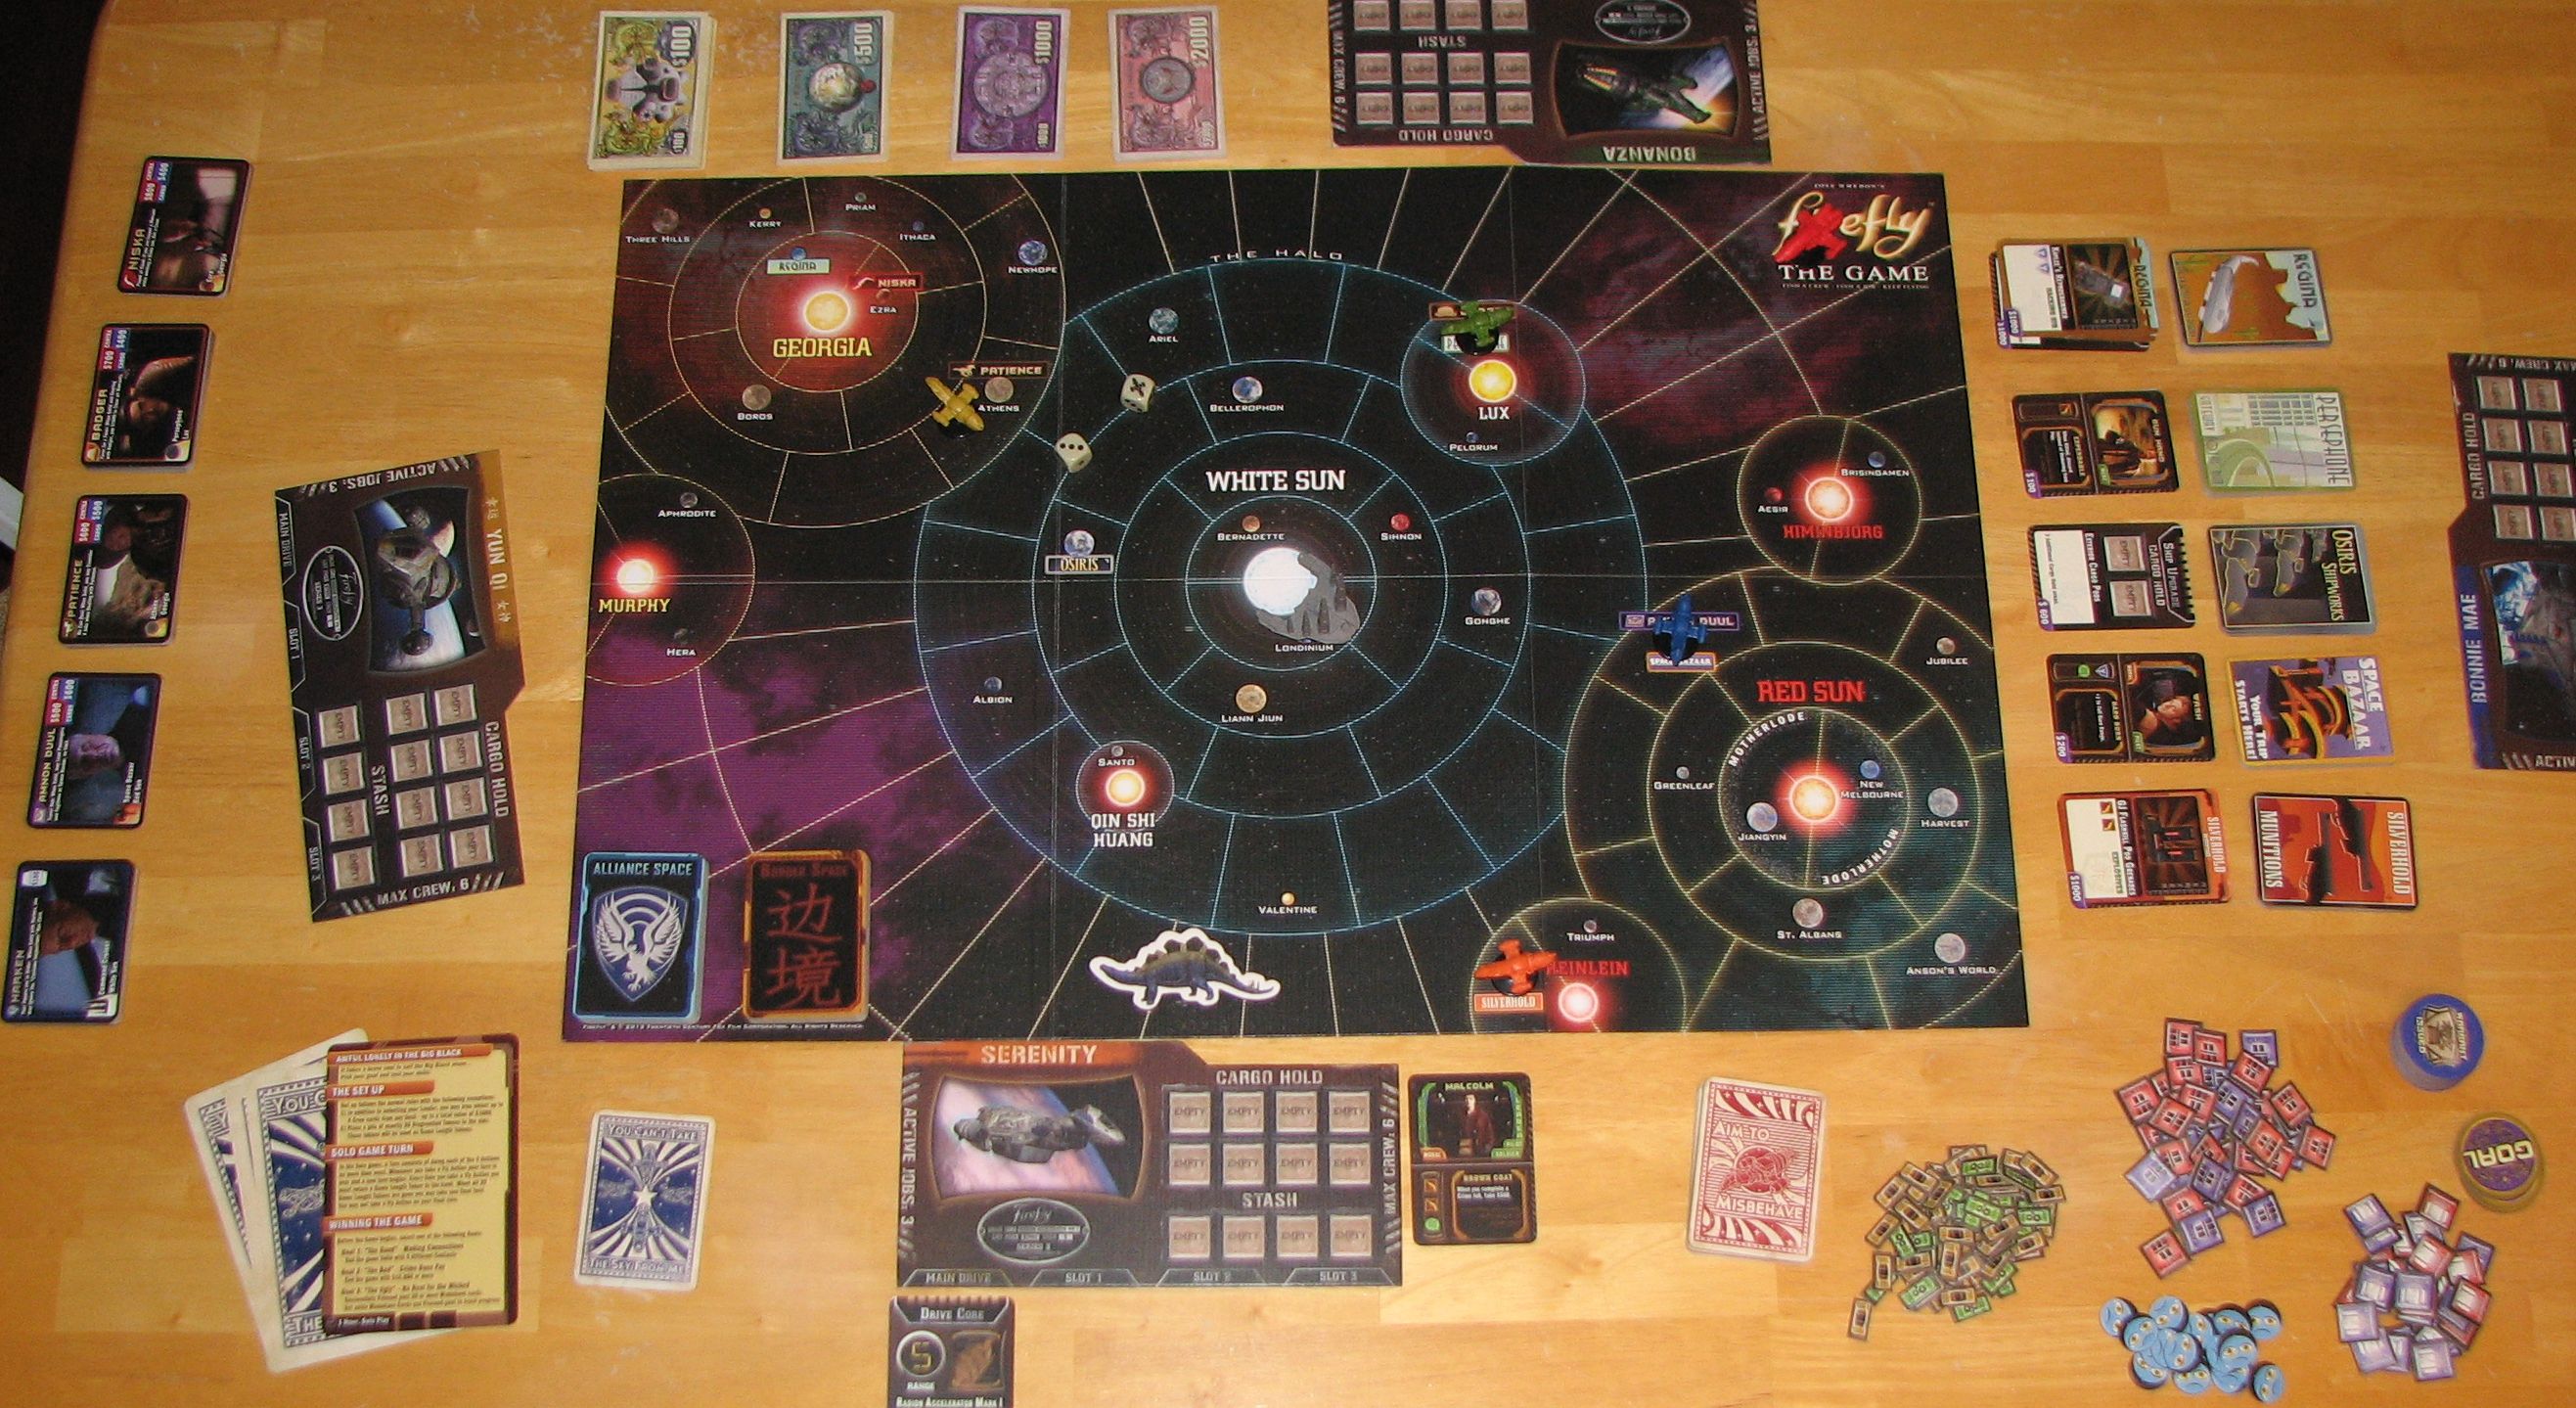 Full four player game setup.